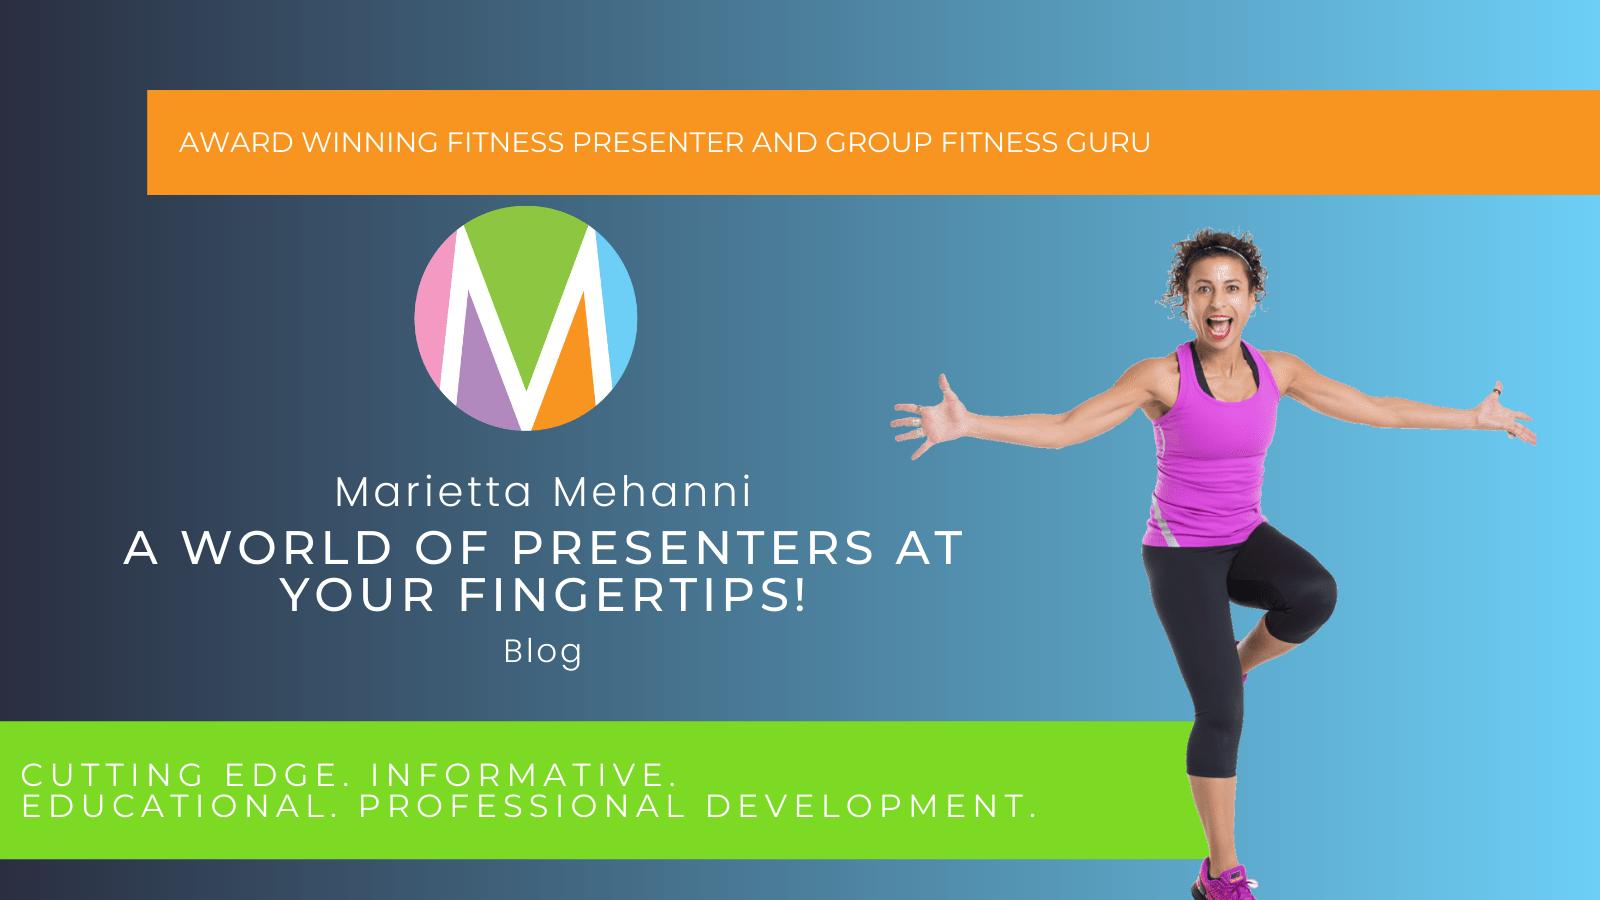 blog 4 a world of presenters at your fingertips marietta mehanni education professional development group fitness personal training informative fitness guru presenter